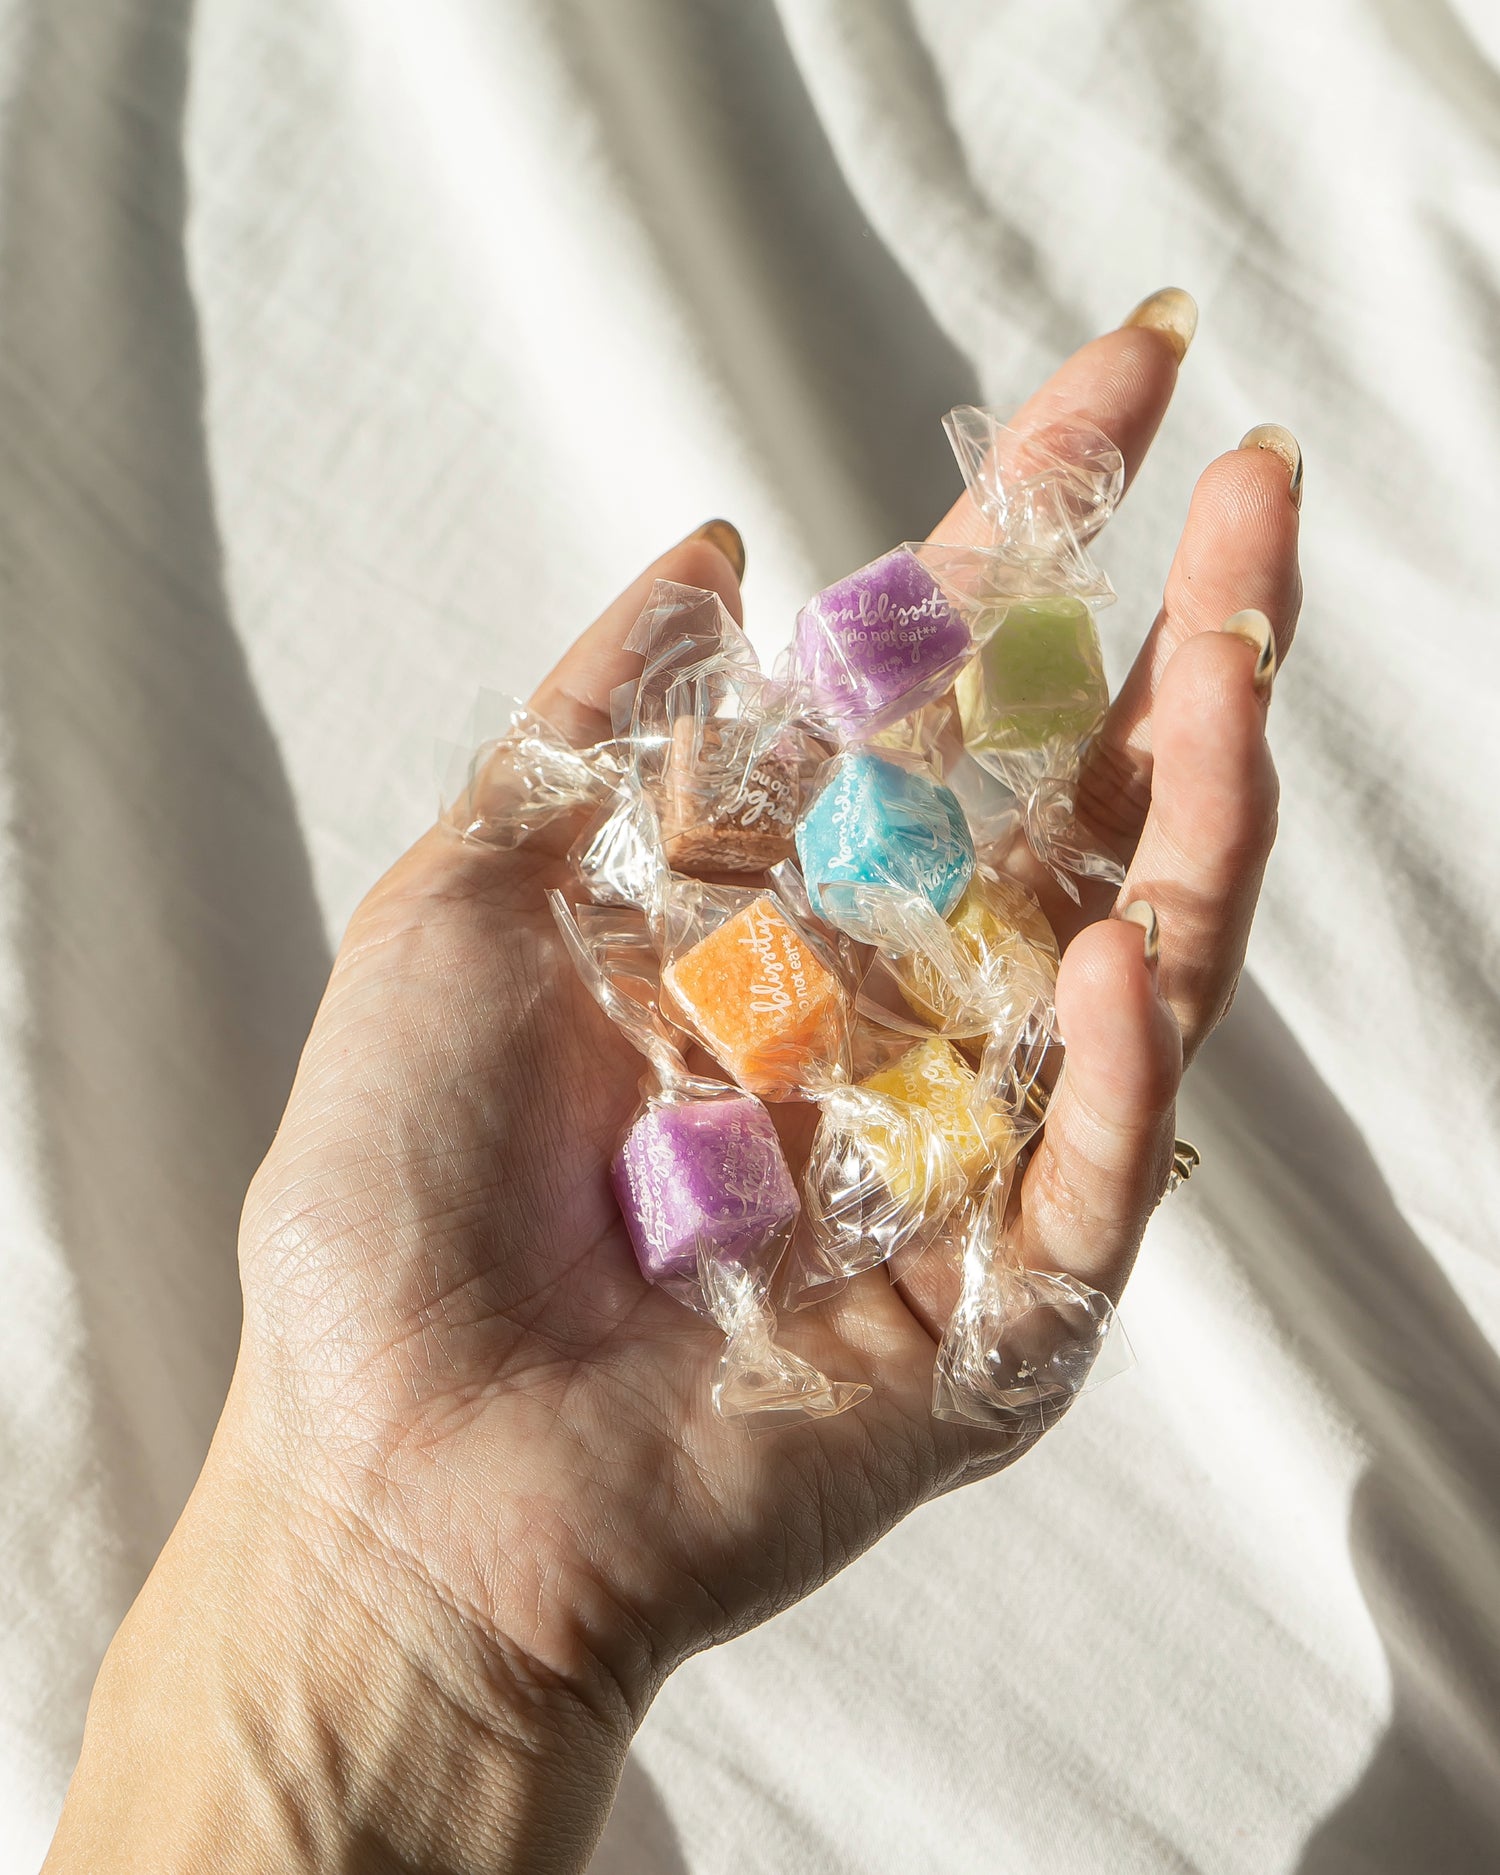 Mini-Me Pack: Sugar Cube Candy Scrub - Lavender Luxury